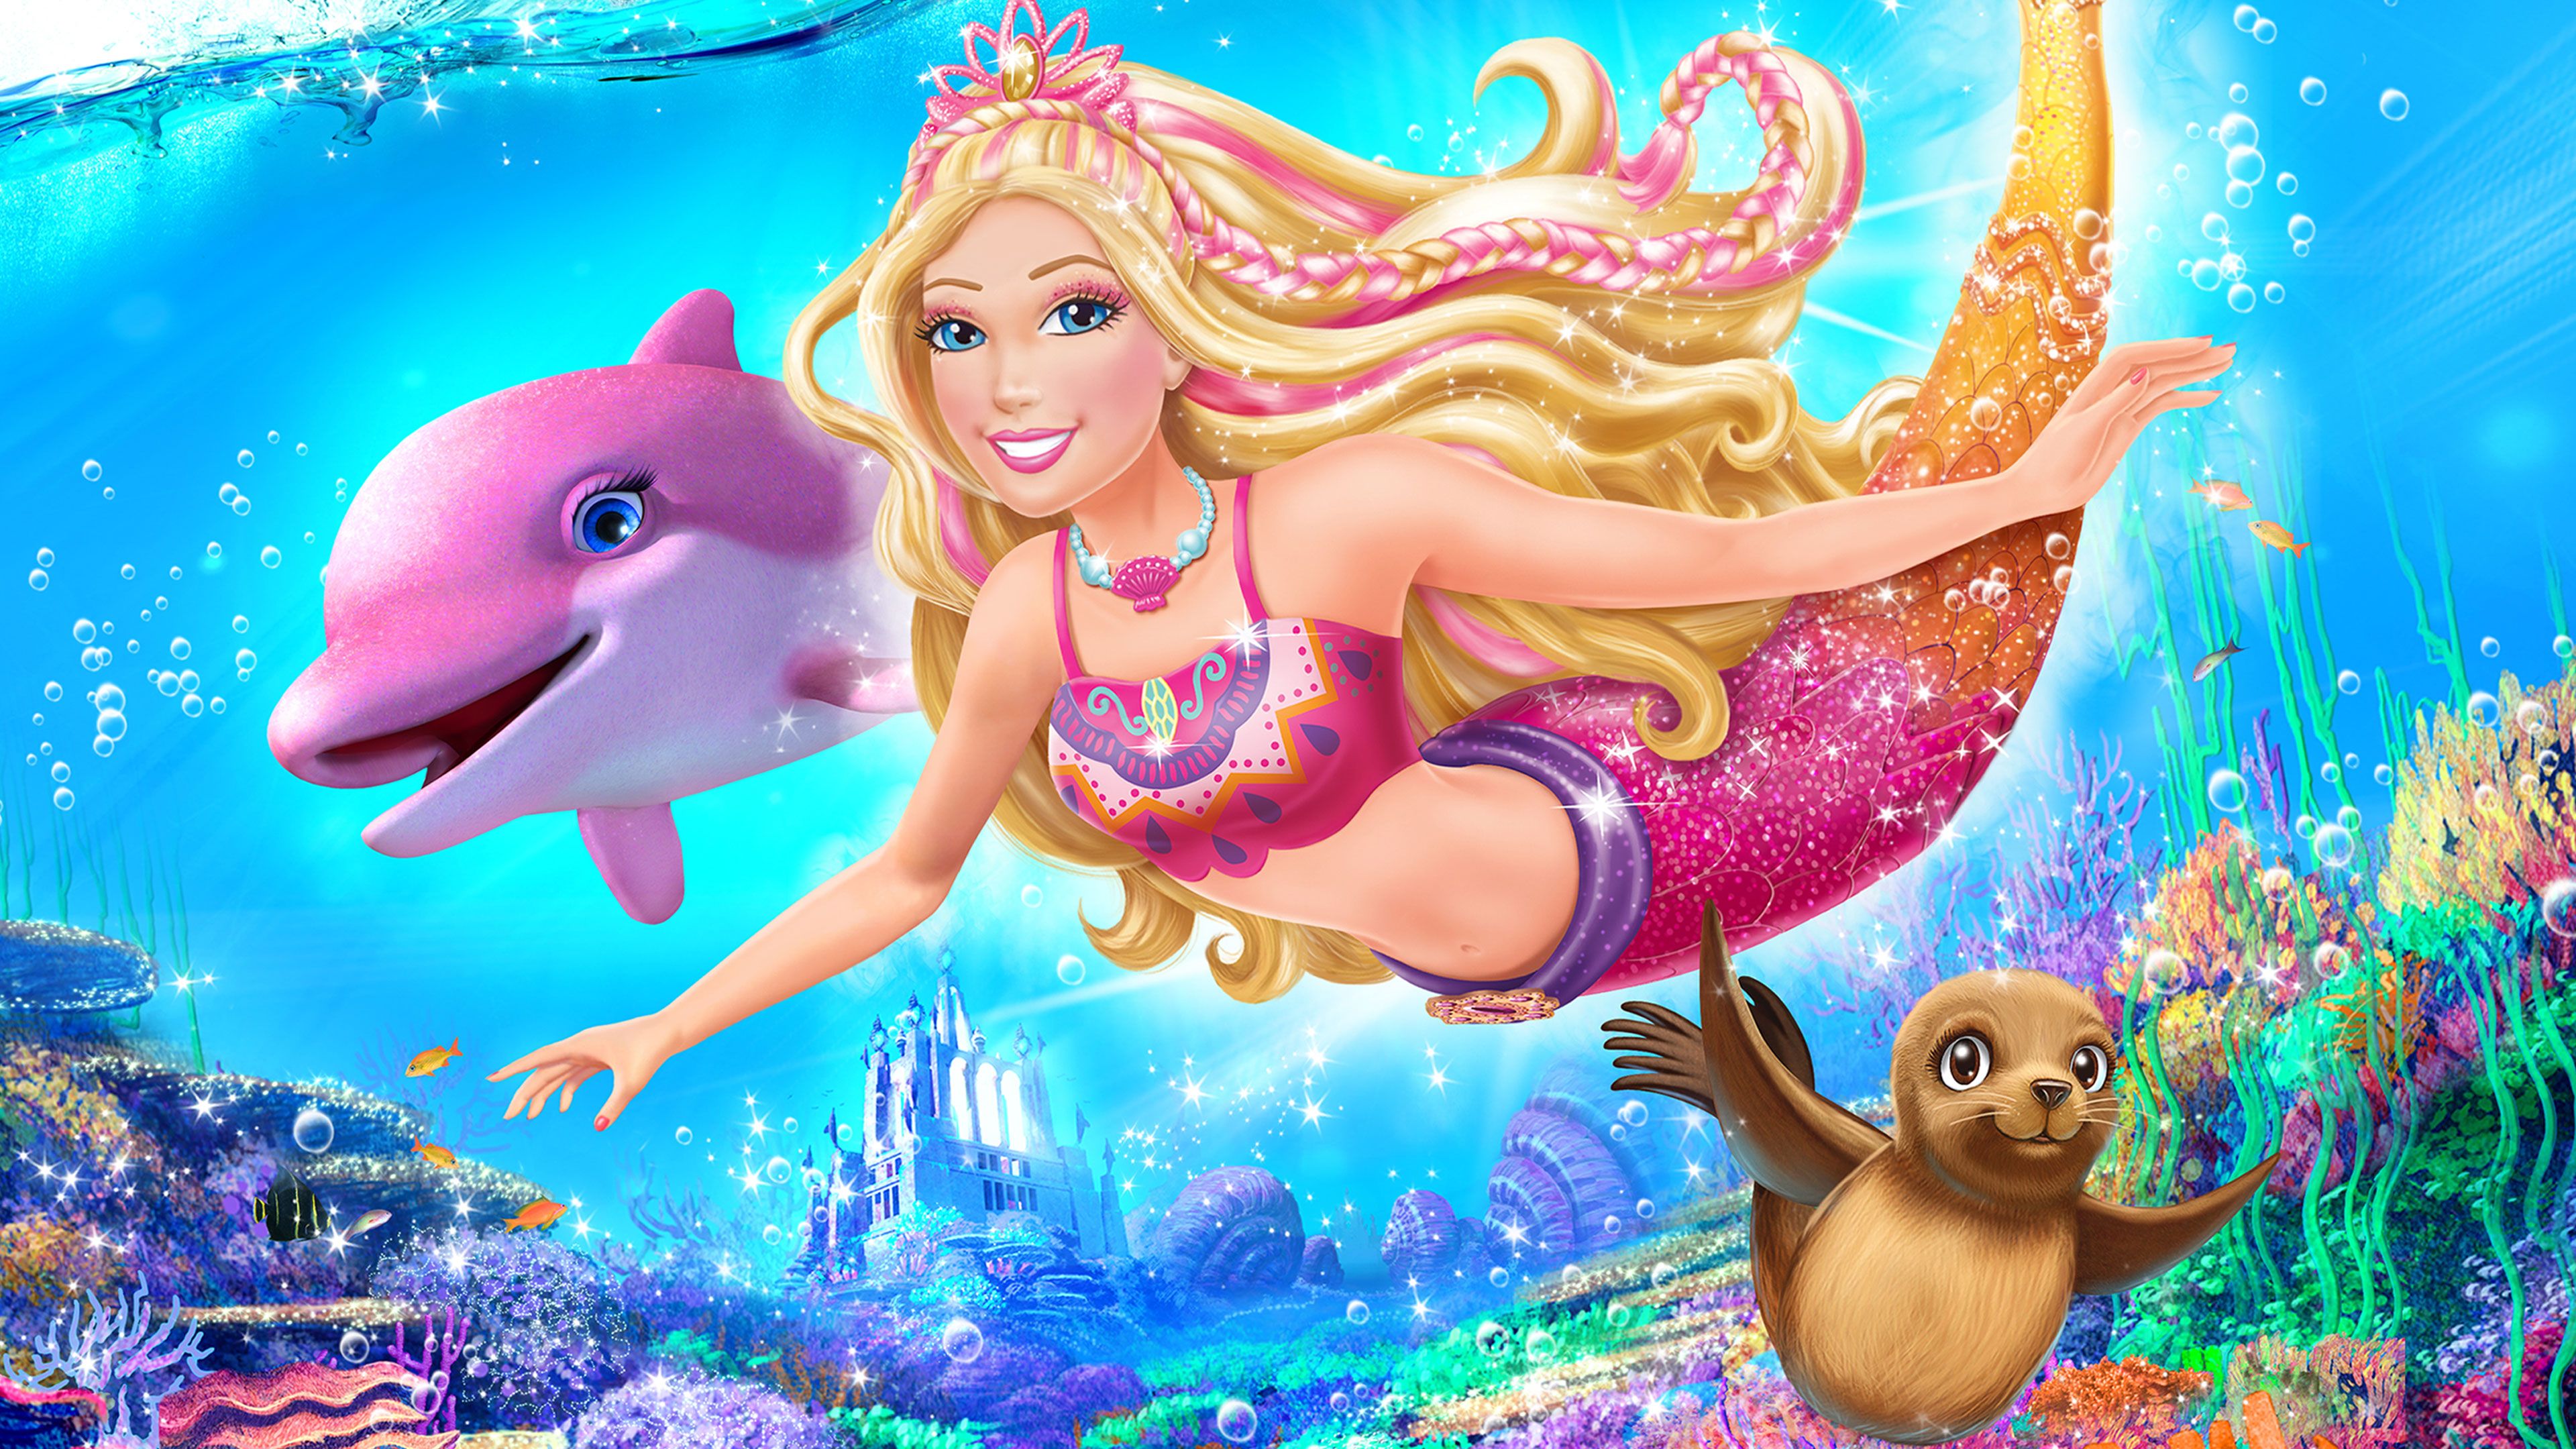 Download Barbie In A Mermaid Tale 2 2012 Full Hd Quality